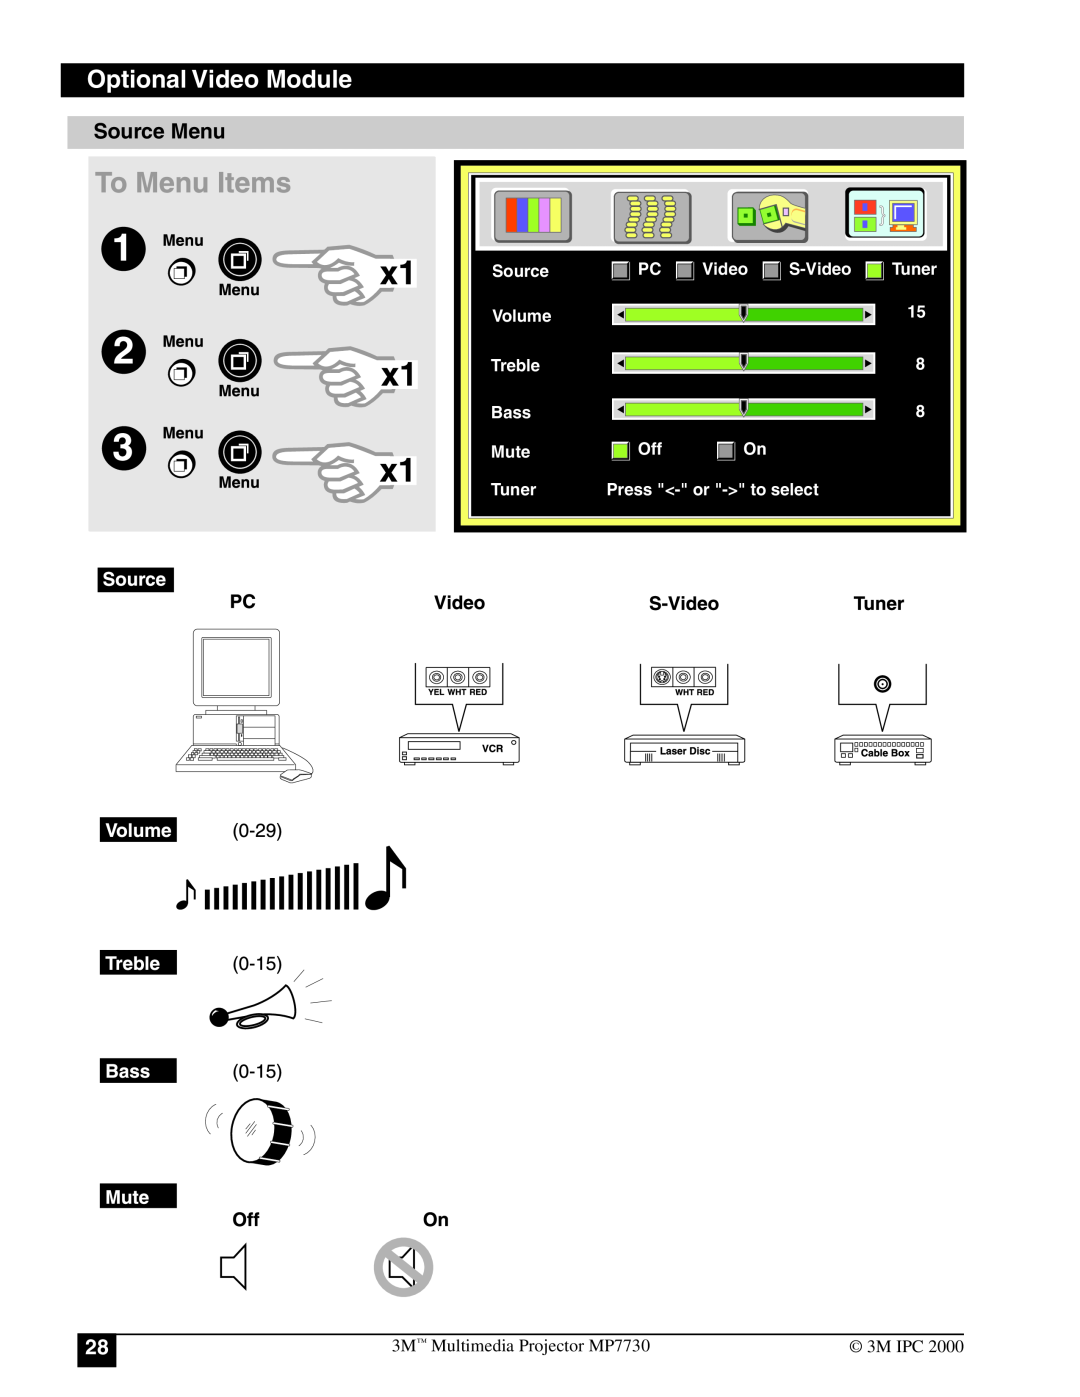 3M MP7730 manual Source Menu, Optional Video Module, S-Video, Tuner, Volume, Treble, Bass, Mute, Press - or - to select 